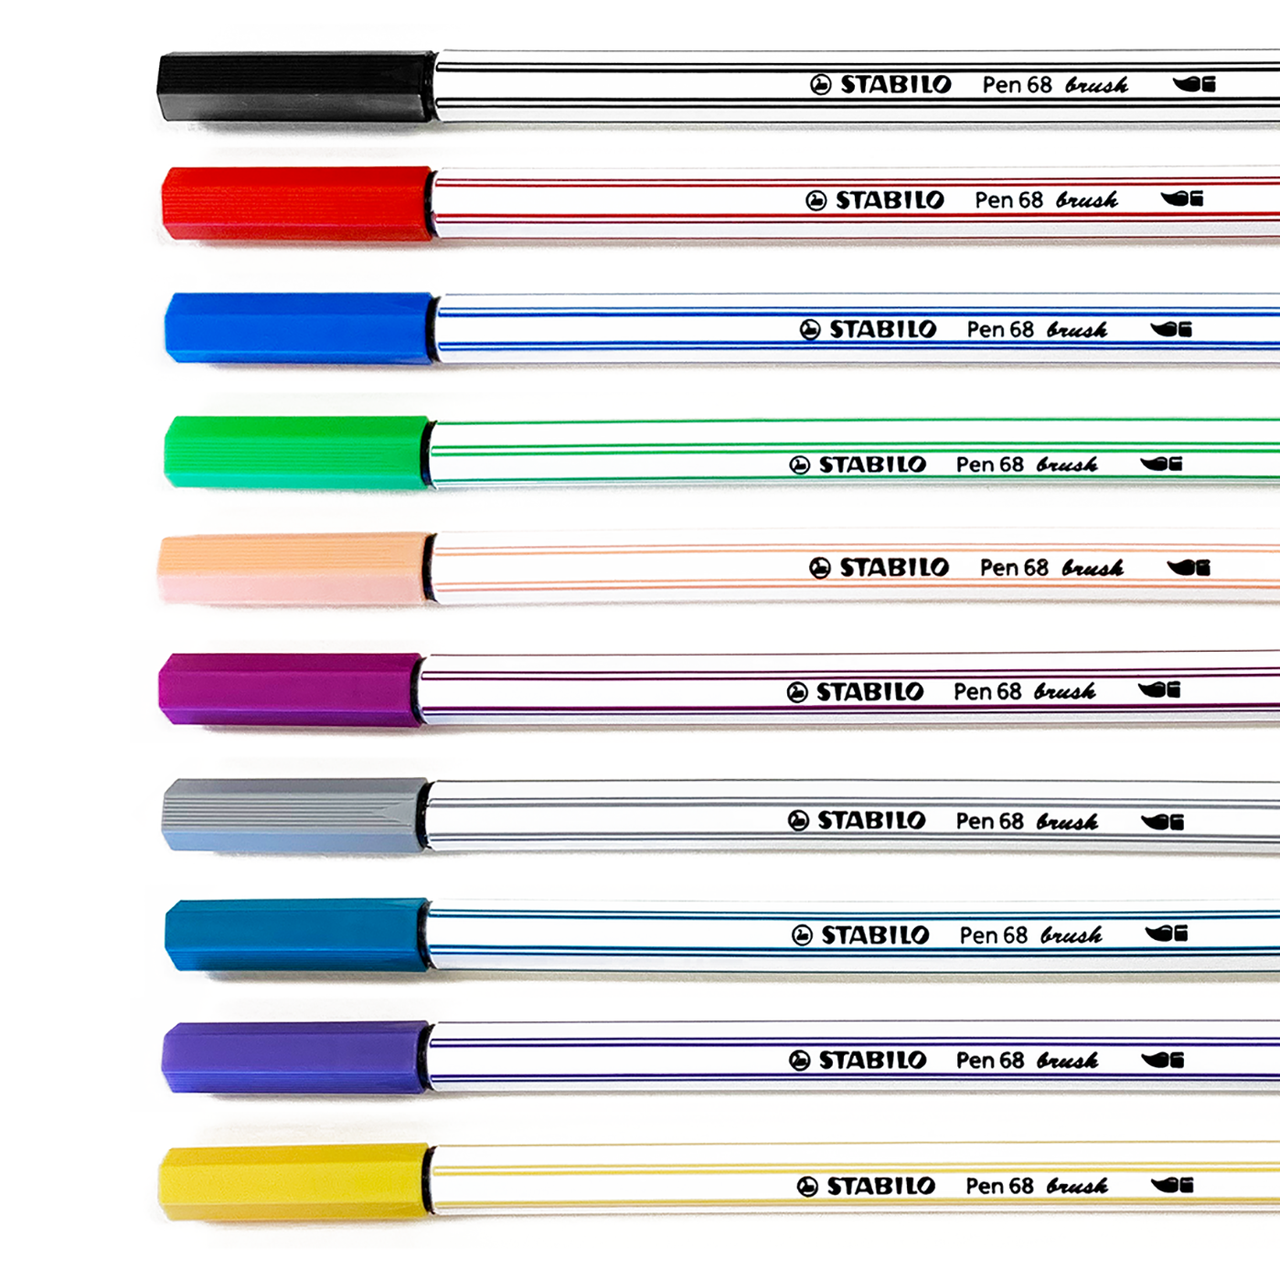 Pen 10. Stabilo ручки. Ручки Stabilo металлик. Bright spearking Color Metallic Brush Pen. 1шт Кироми шариковая ручка 10 цветов.